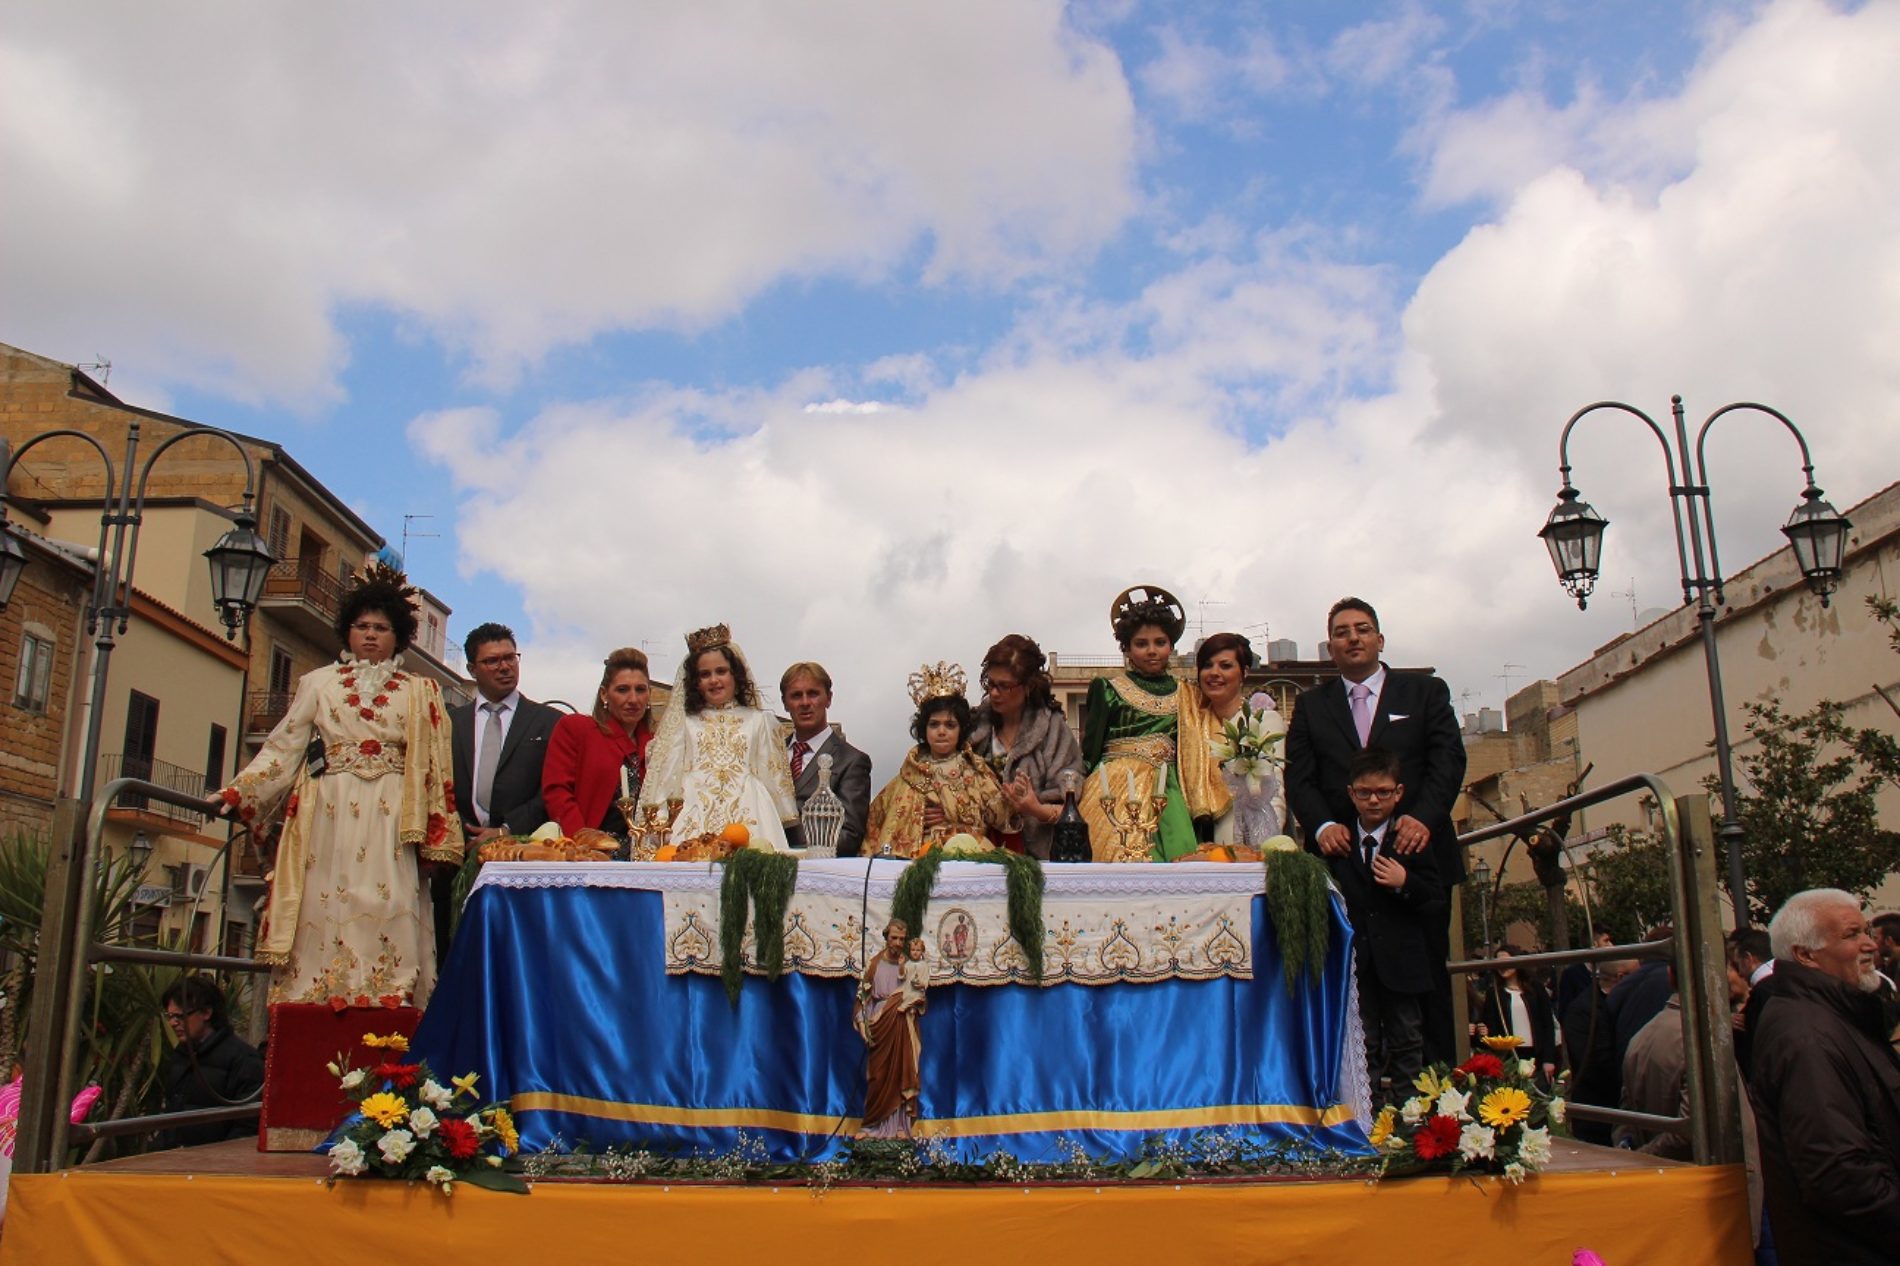 Festa di San Giuseppe: partecipata la sacra rappresentazione stamattina in piazza Regina Margherita: